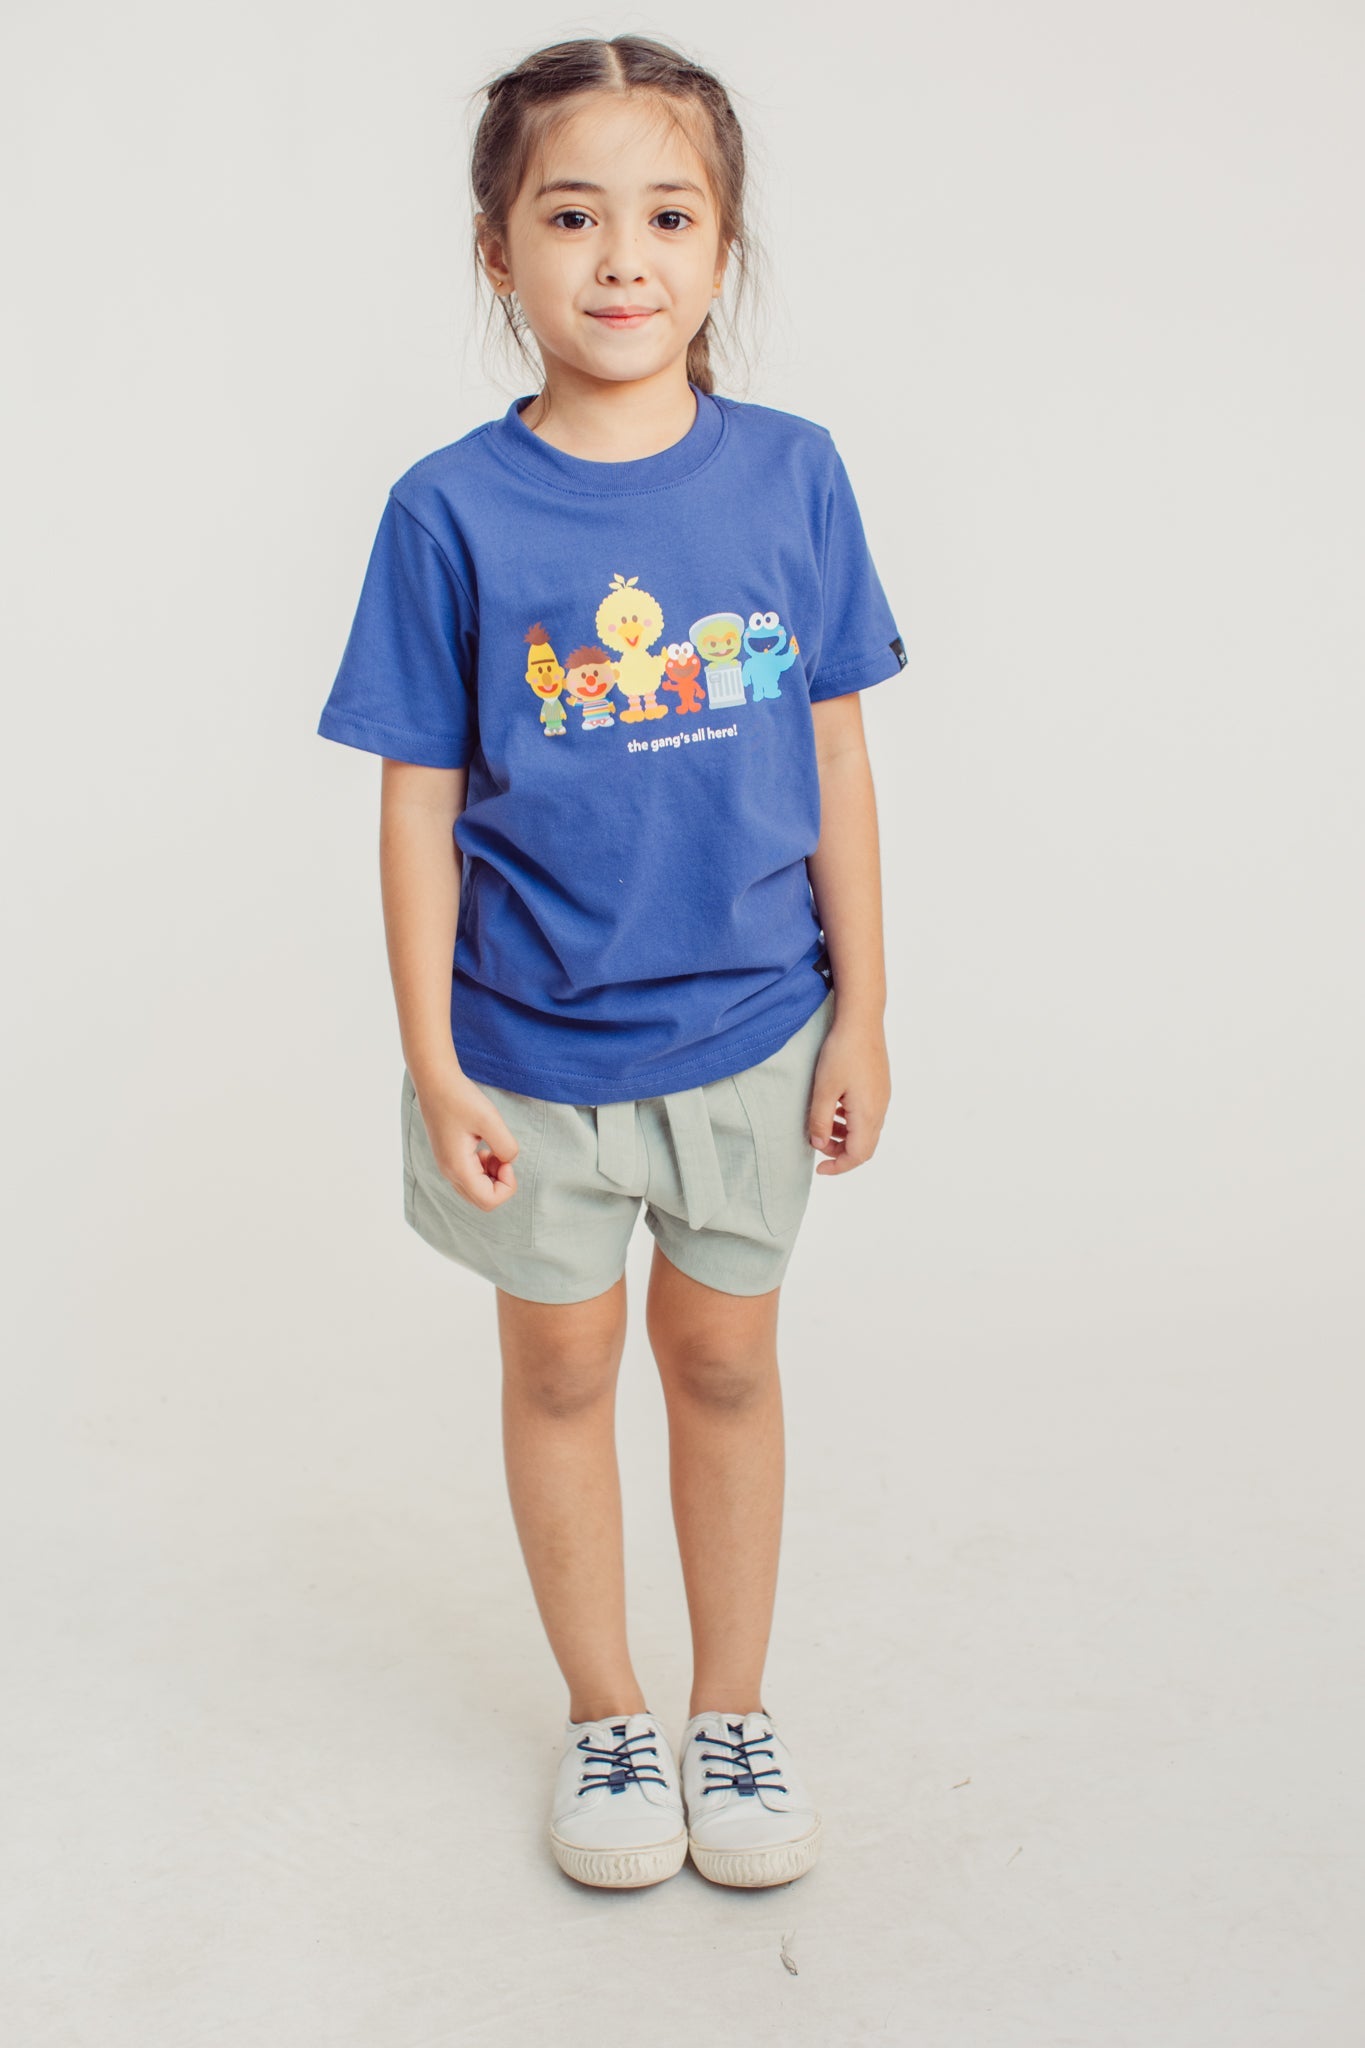 Royal Blue with Sesame Street Basic Tshirt Kids - Mossimo PH